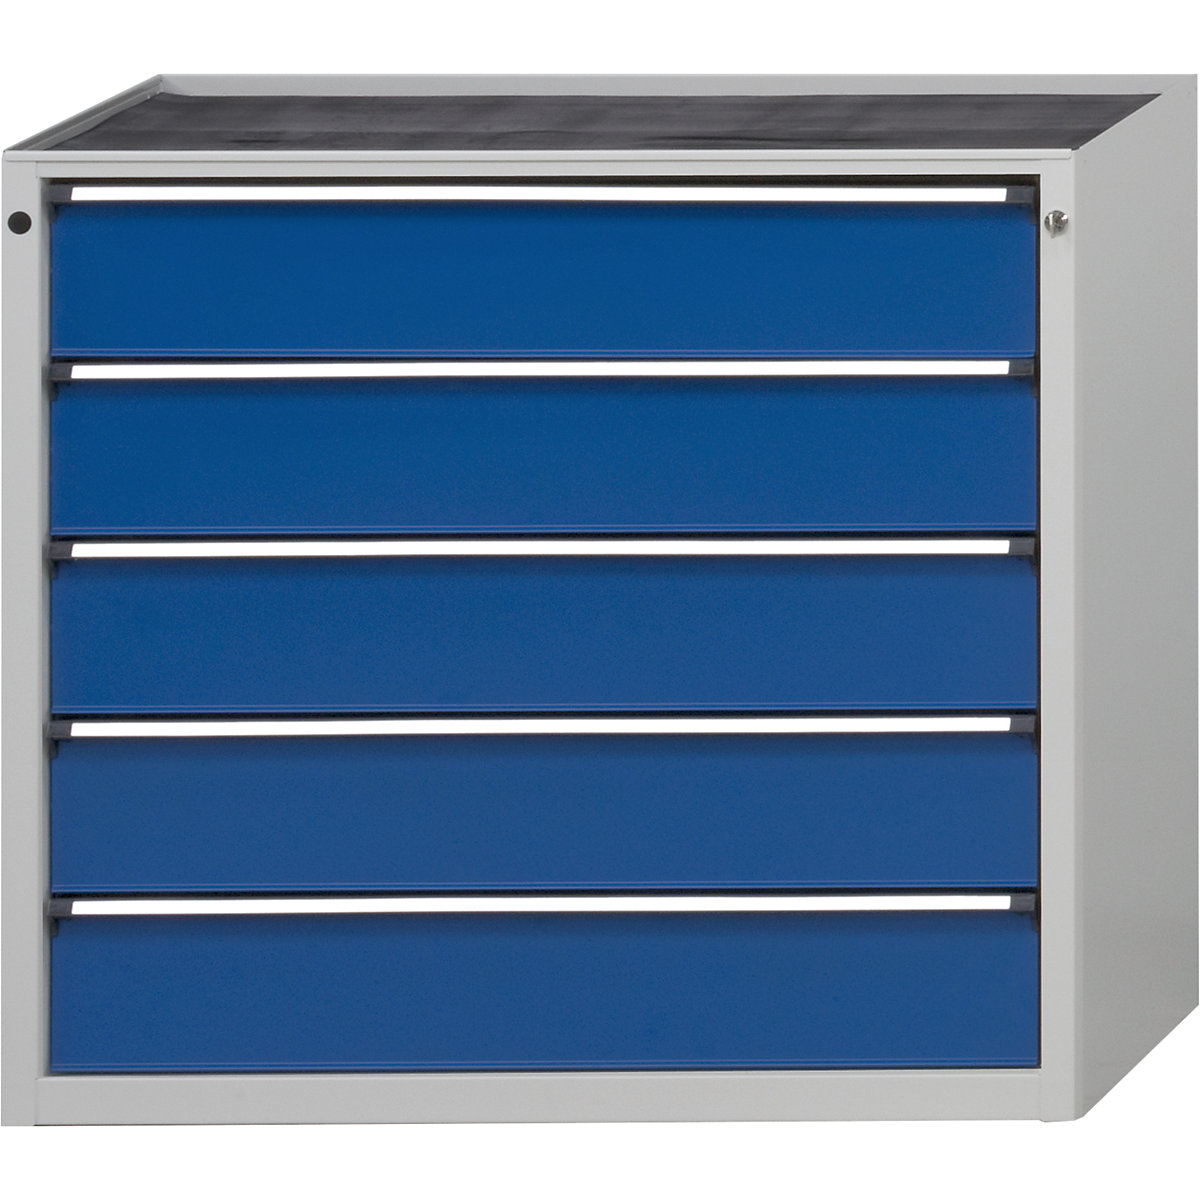 ANKE – Armoire à tiroirs, l x p 1060 x 675 mm, 5 tiroirs, hauteur 980 mm, façade bleu gentiane